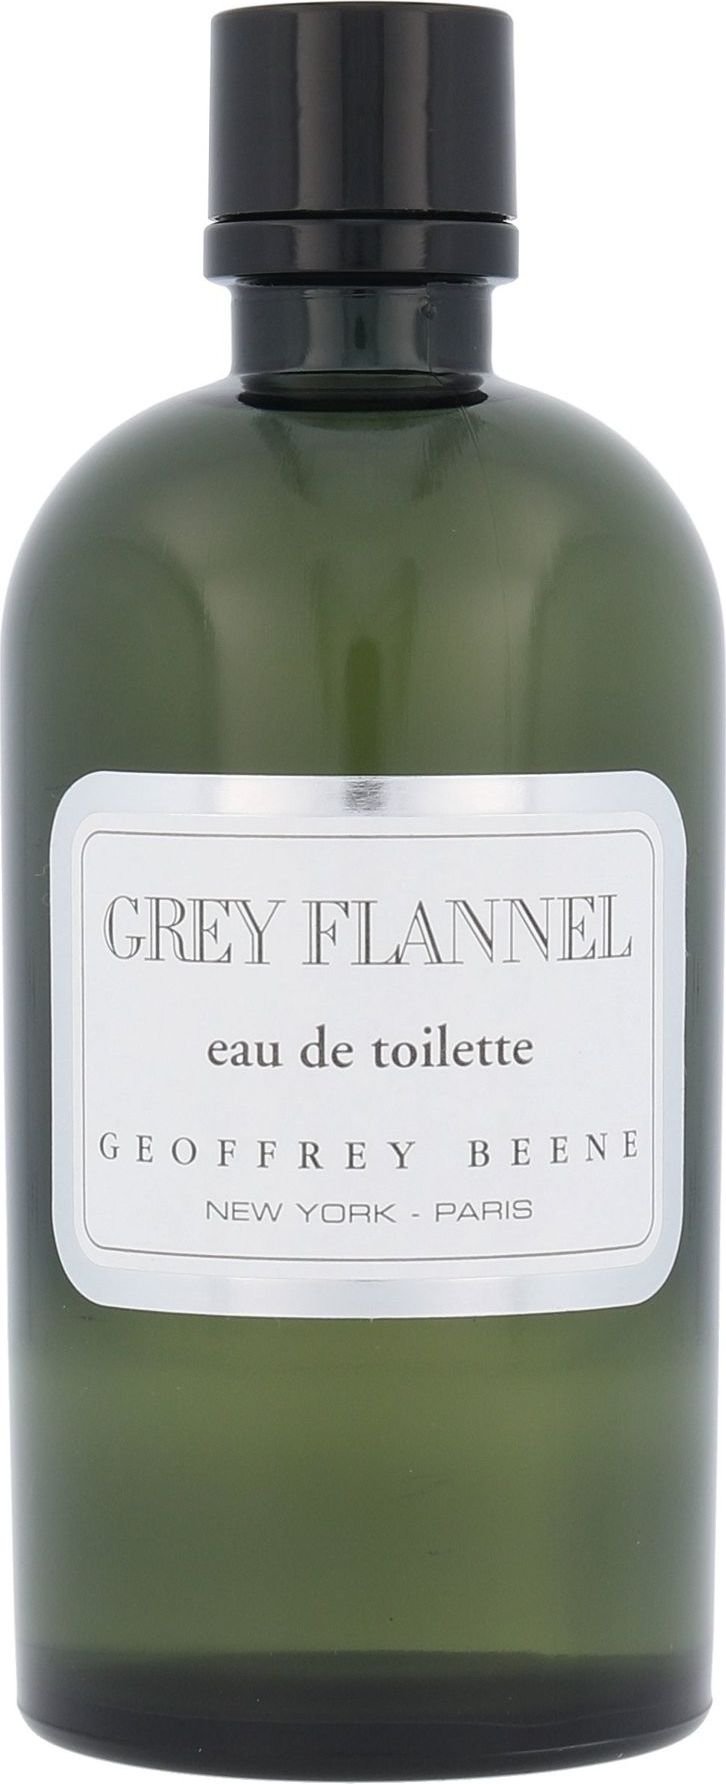 Geoffrey Beene Grey Flannel - parfum EDT (Eau de Toilette) de 240 ml.